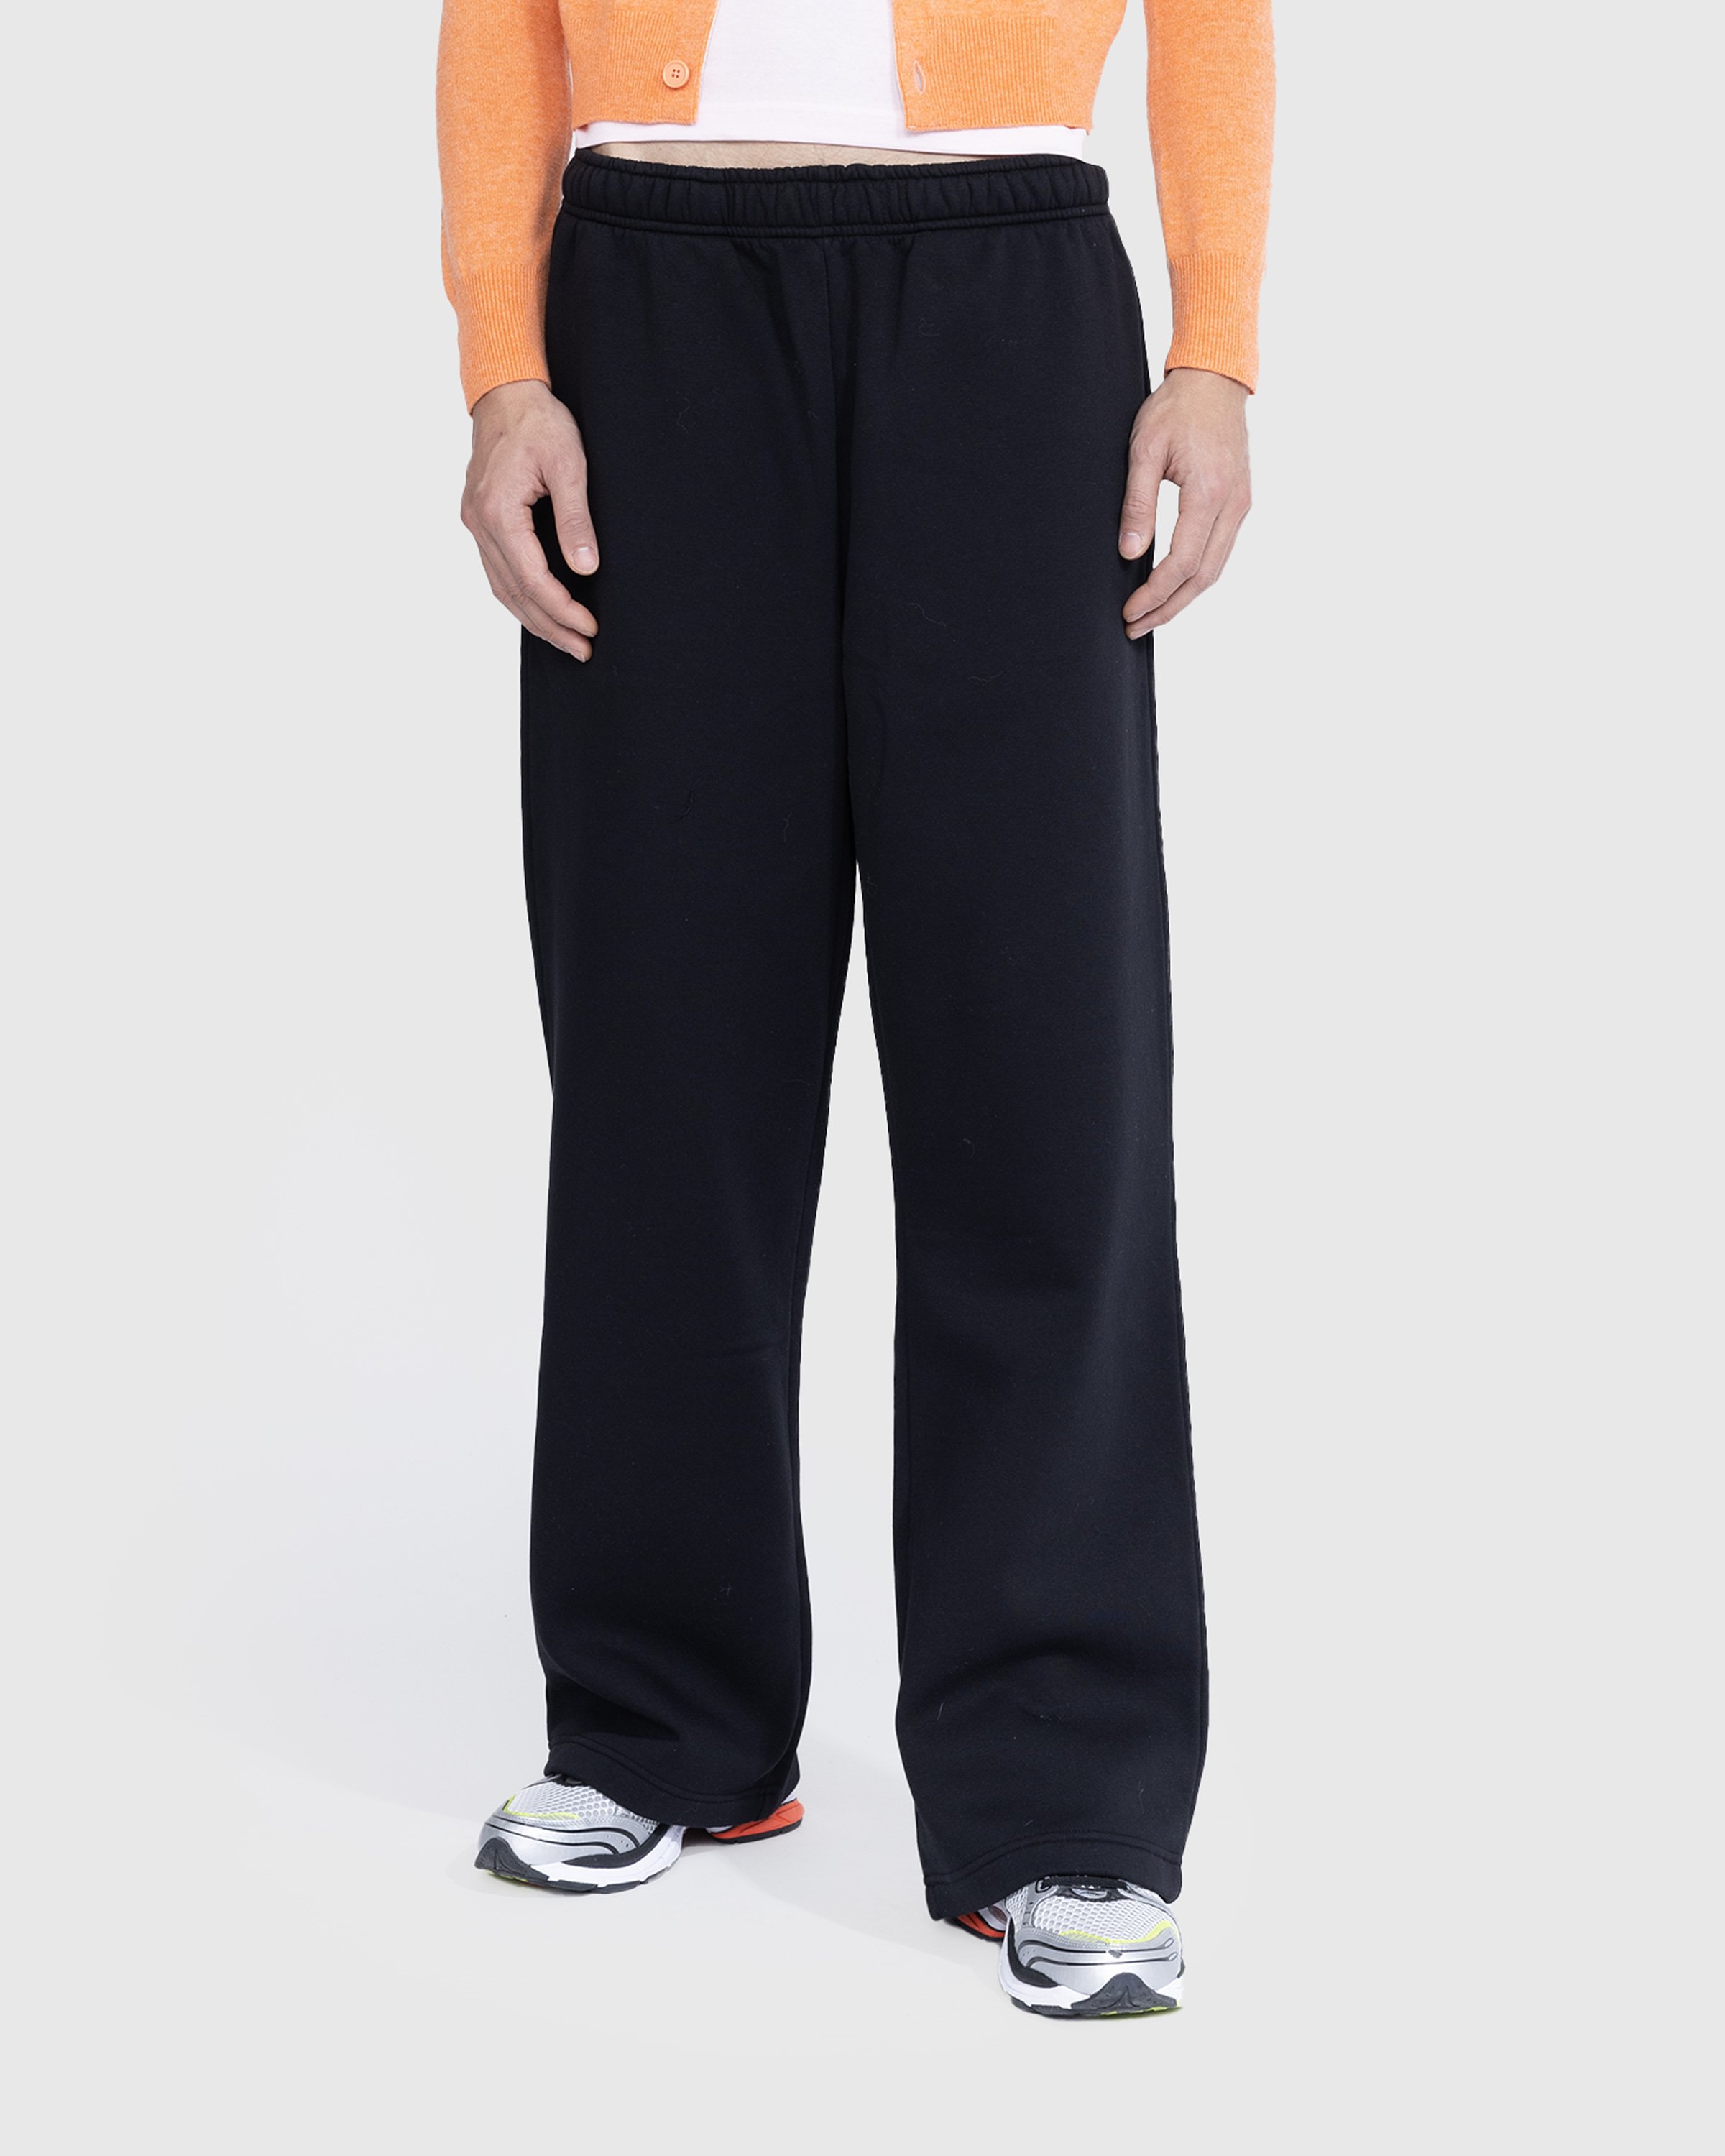 Acne Studios - Cotton Sweatpants Black - Clothing - Black - Image 2